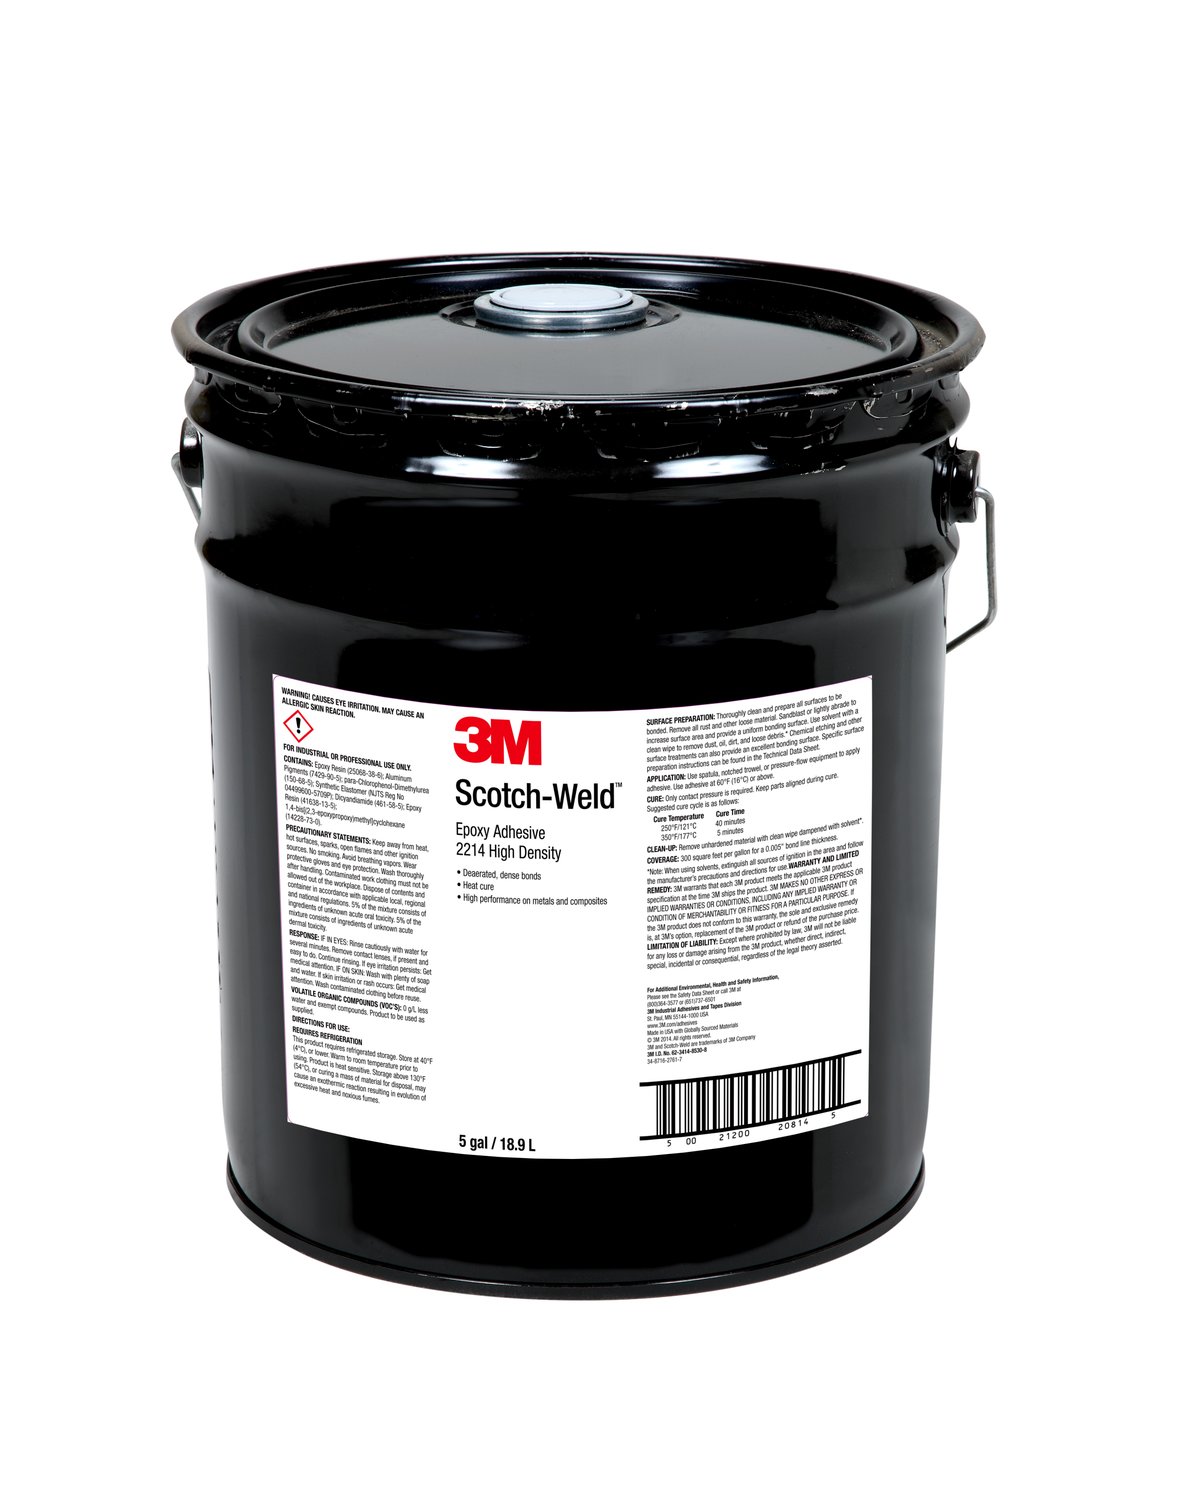 7010367423 - 3M Scotch-Weld Epoxy Adhesive 2214, Hi-Density, Gray, 5 Gallon (Pail),
Drum